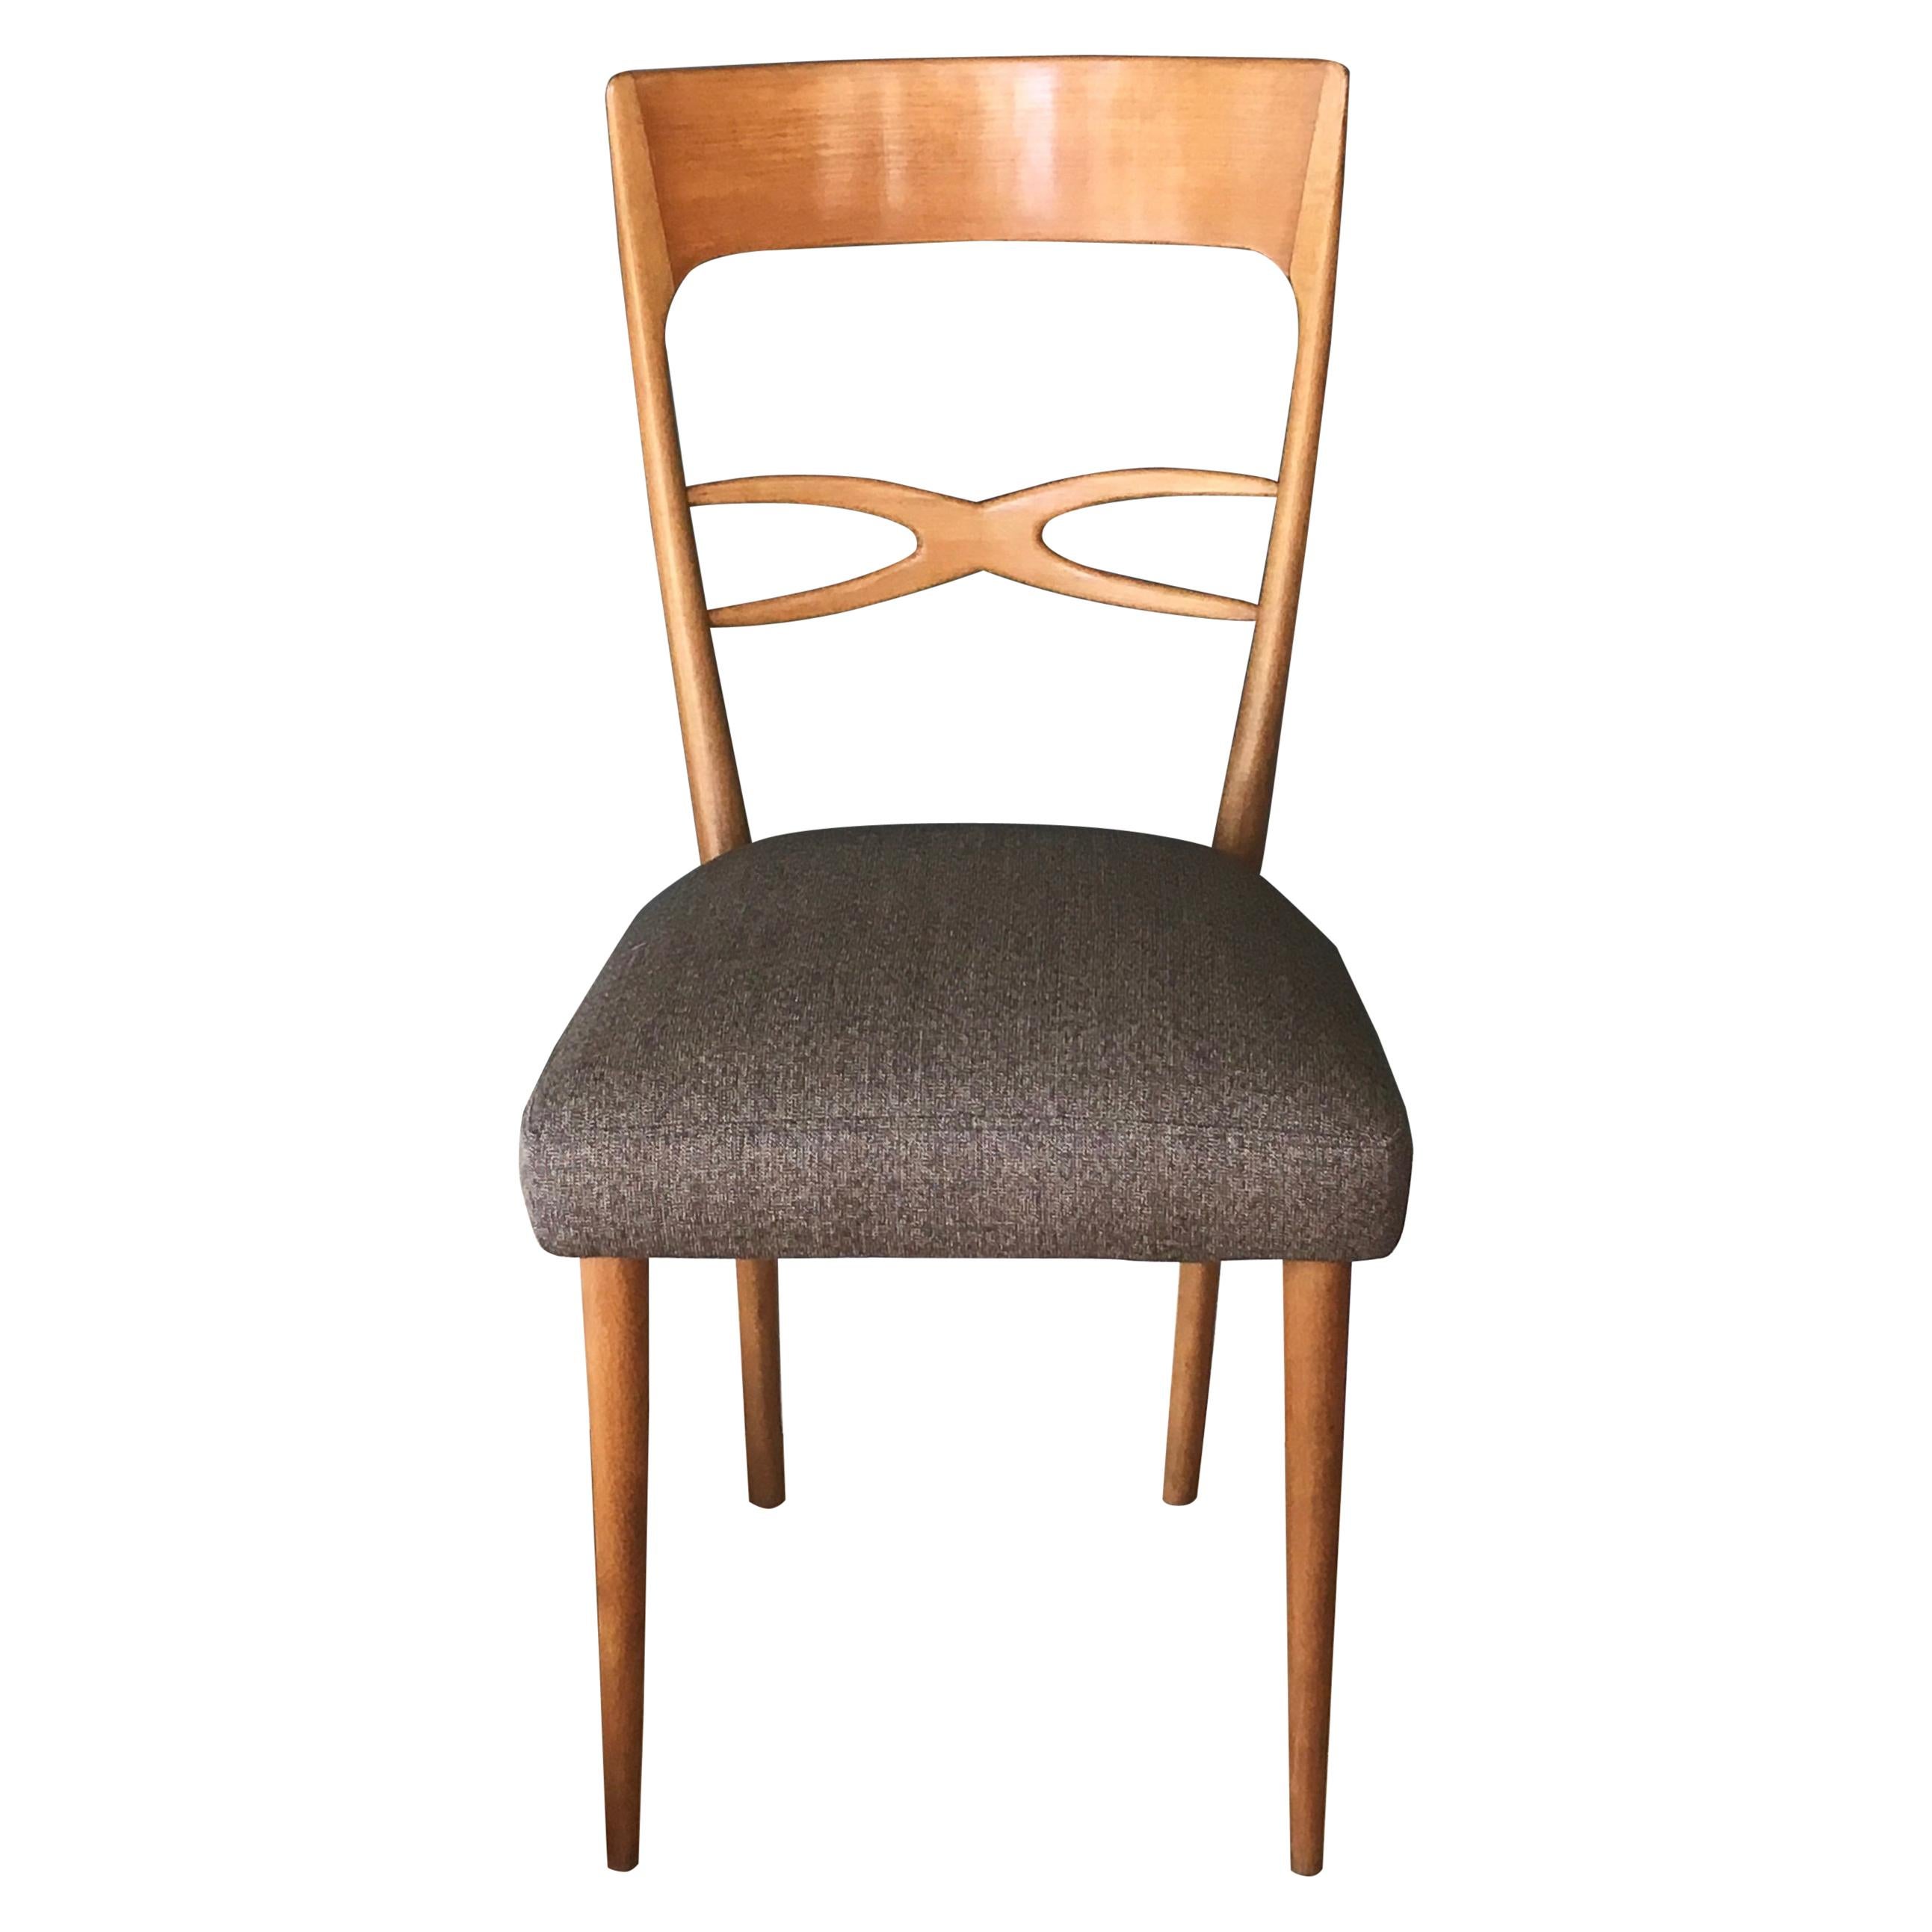 20th Century 6 blond wood midcentury Italian dining chairs, 1950s, attrib. to Melchiorre Bega